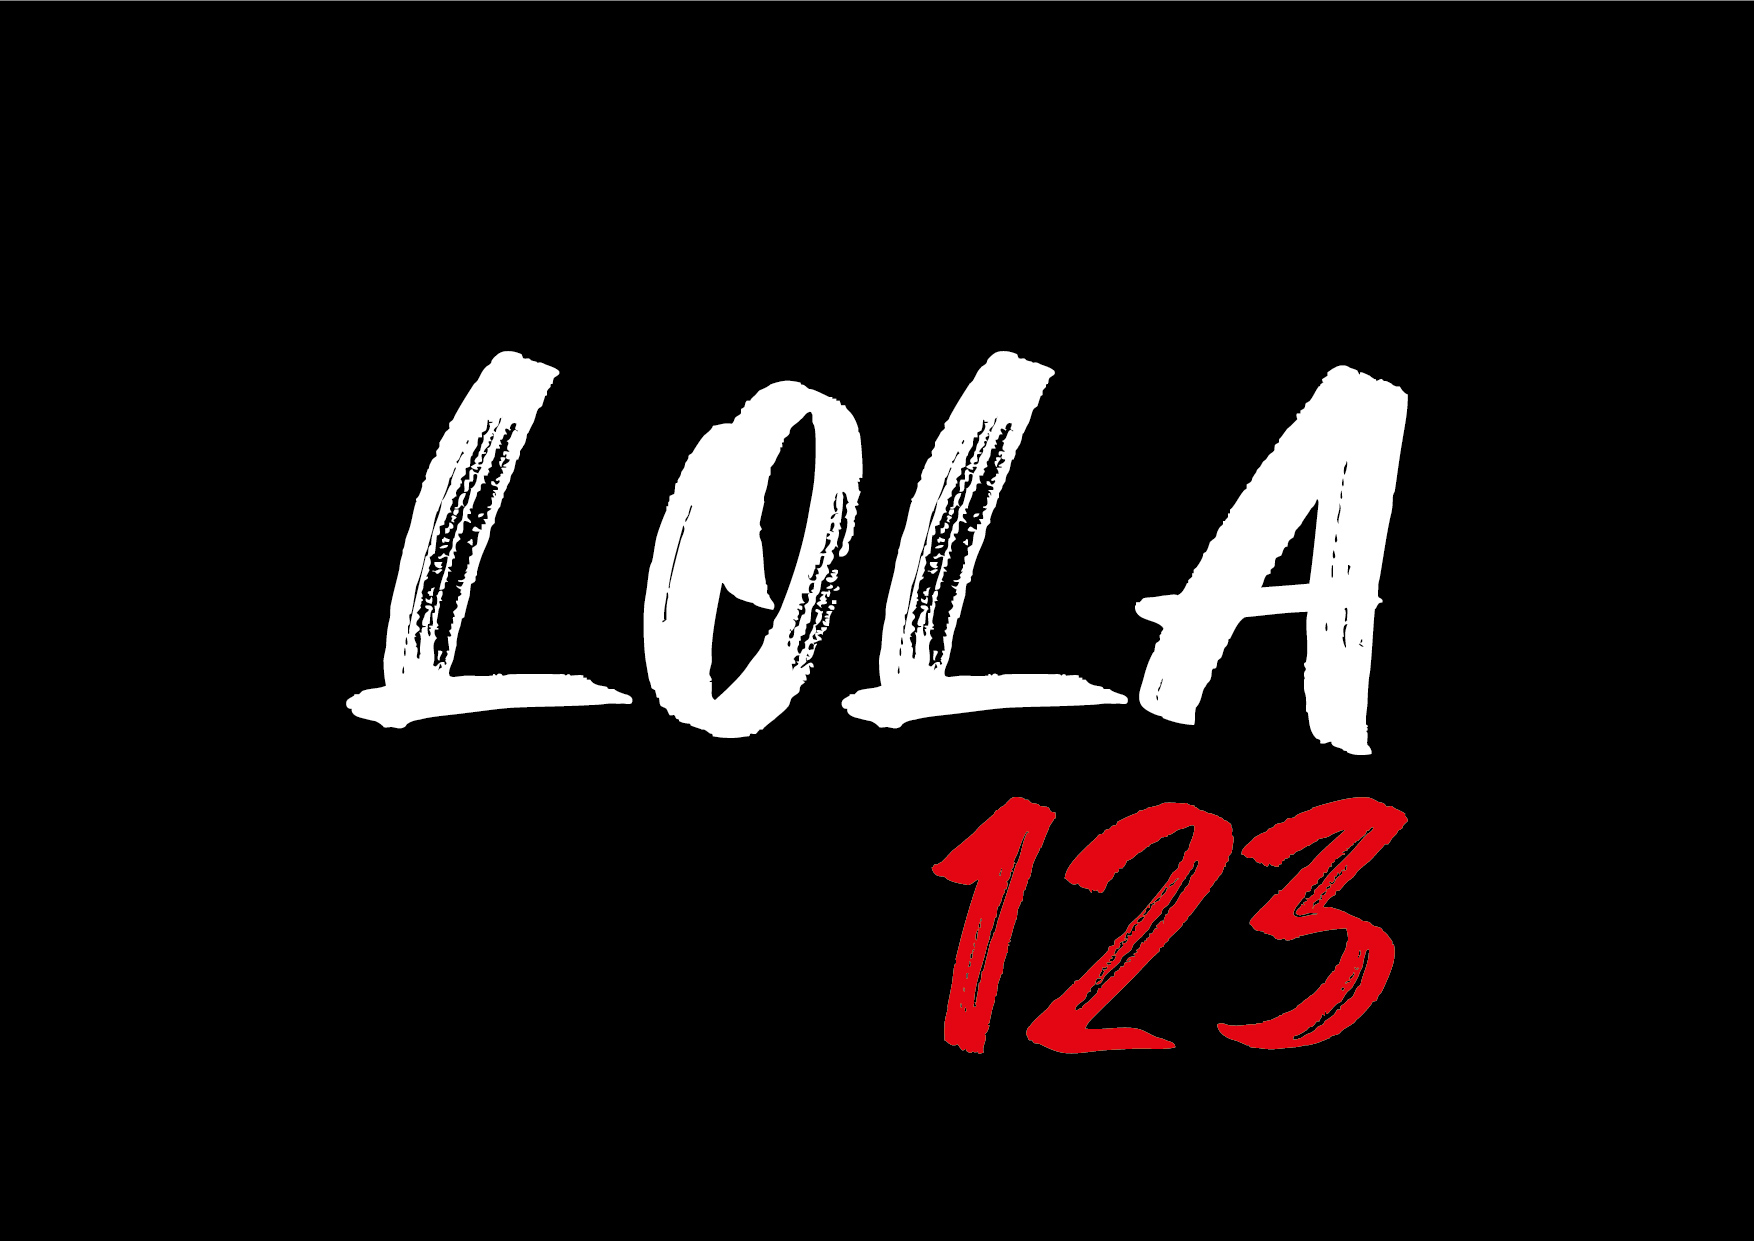 Lola 1,2,3